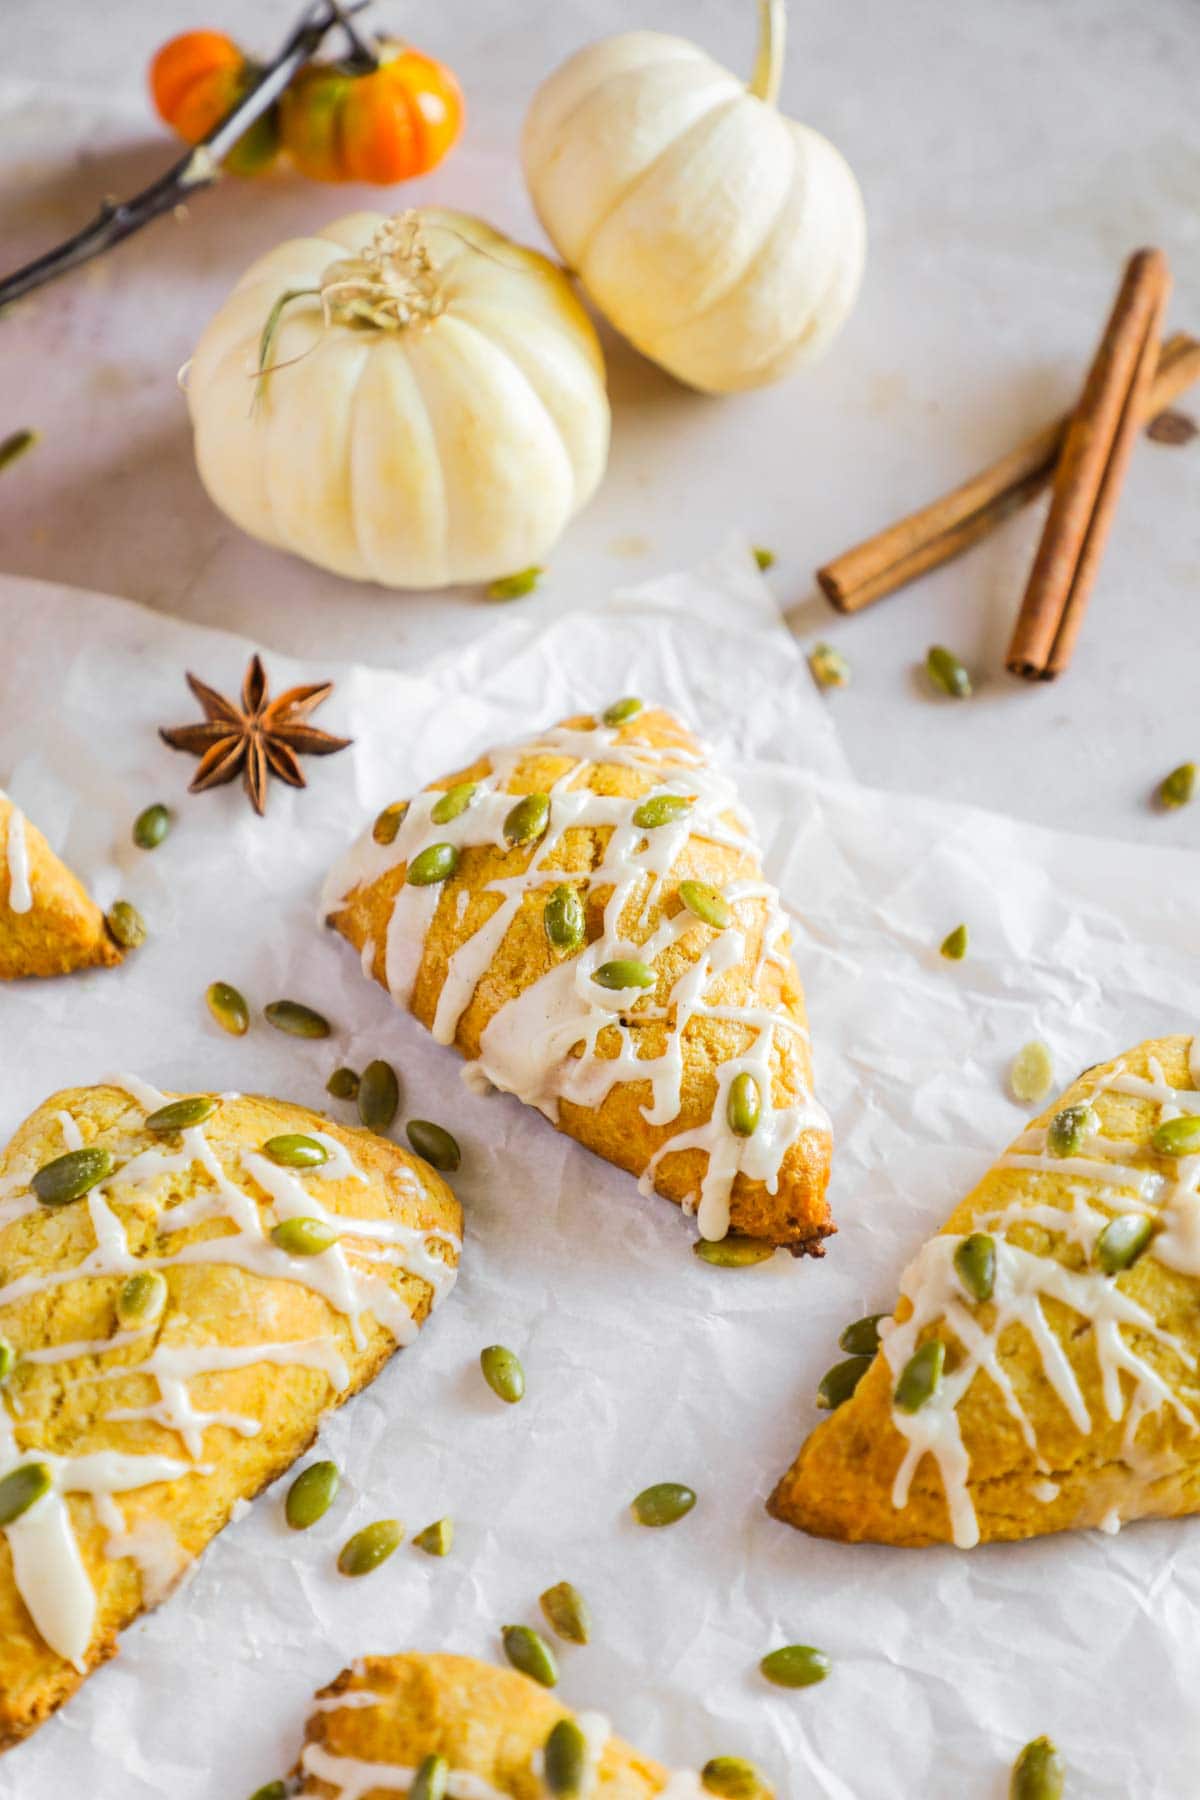 Pumpkin scones (better than Starbucks!) with maple vanilla paste glaze on parchment paper with decorative white pumpkins and cinnamon sticks.